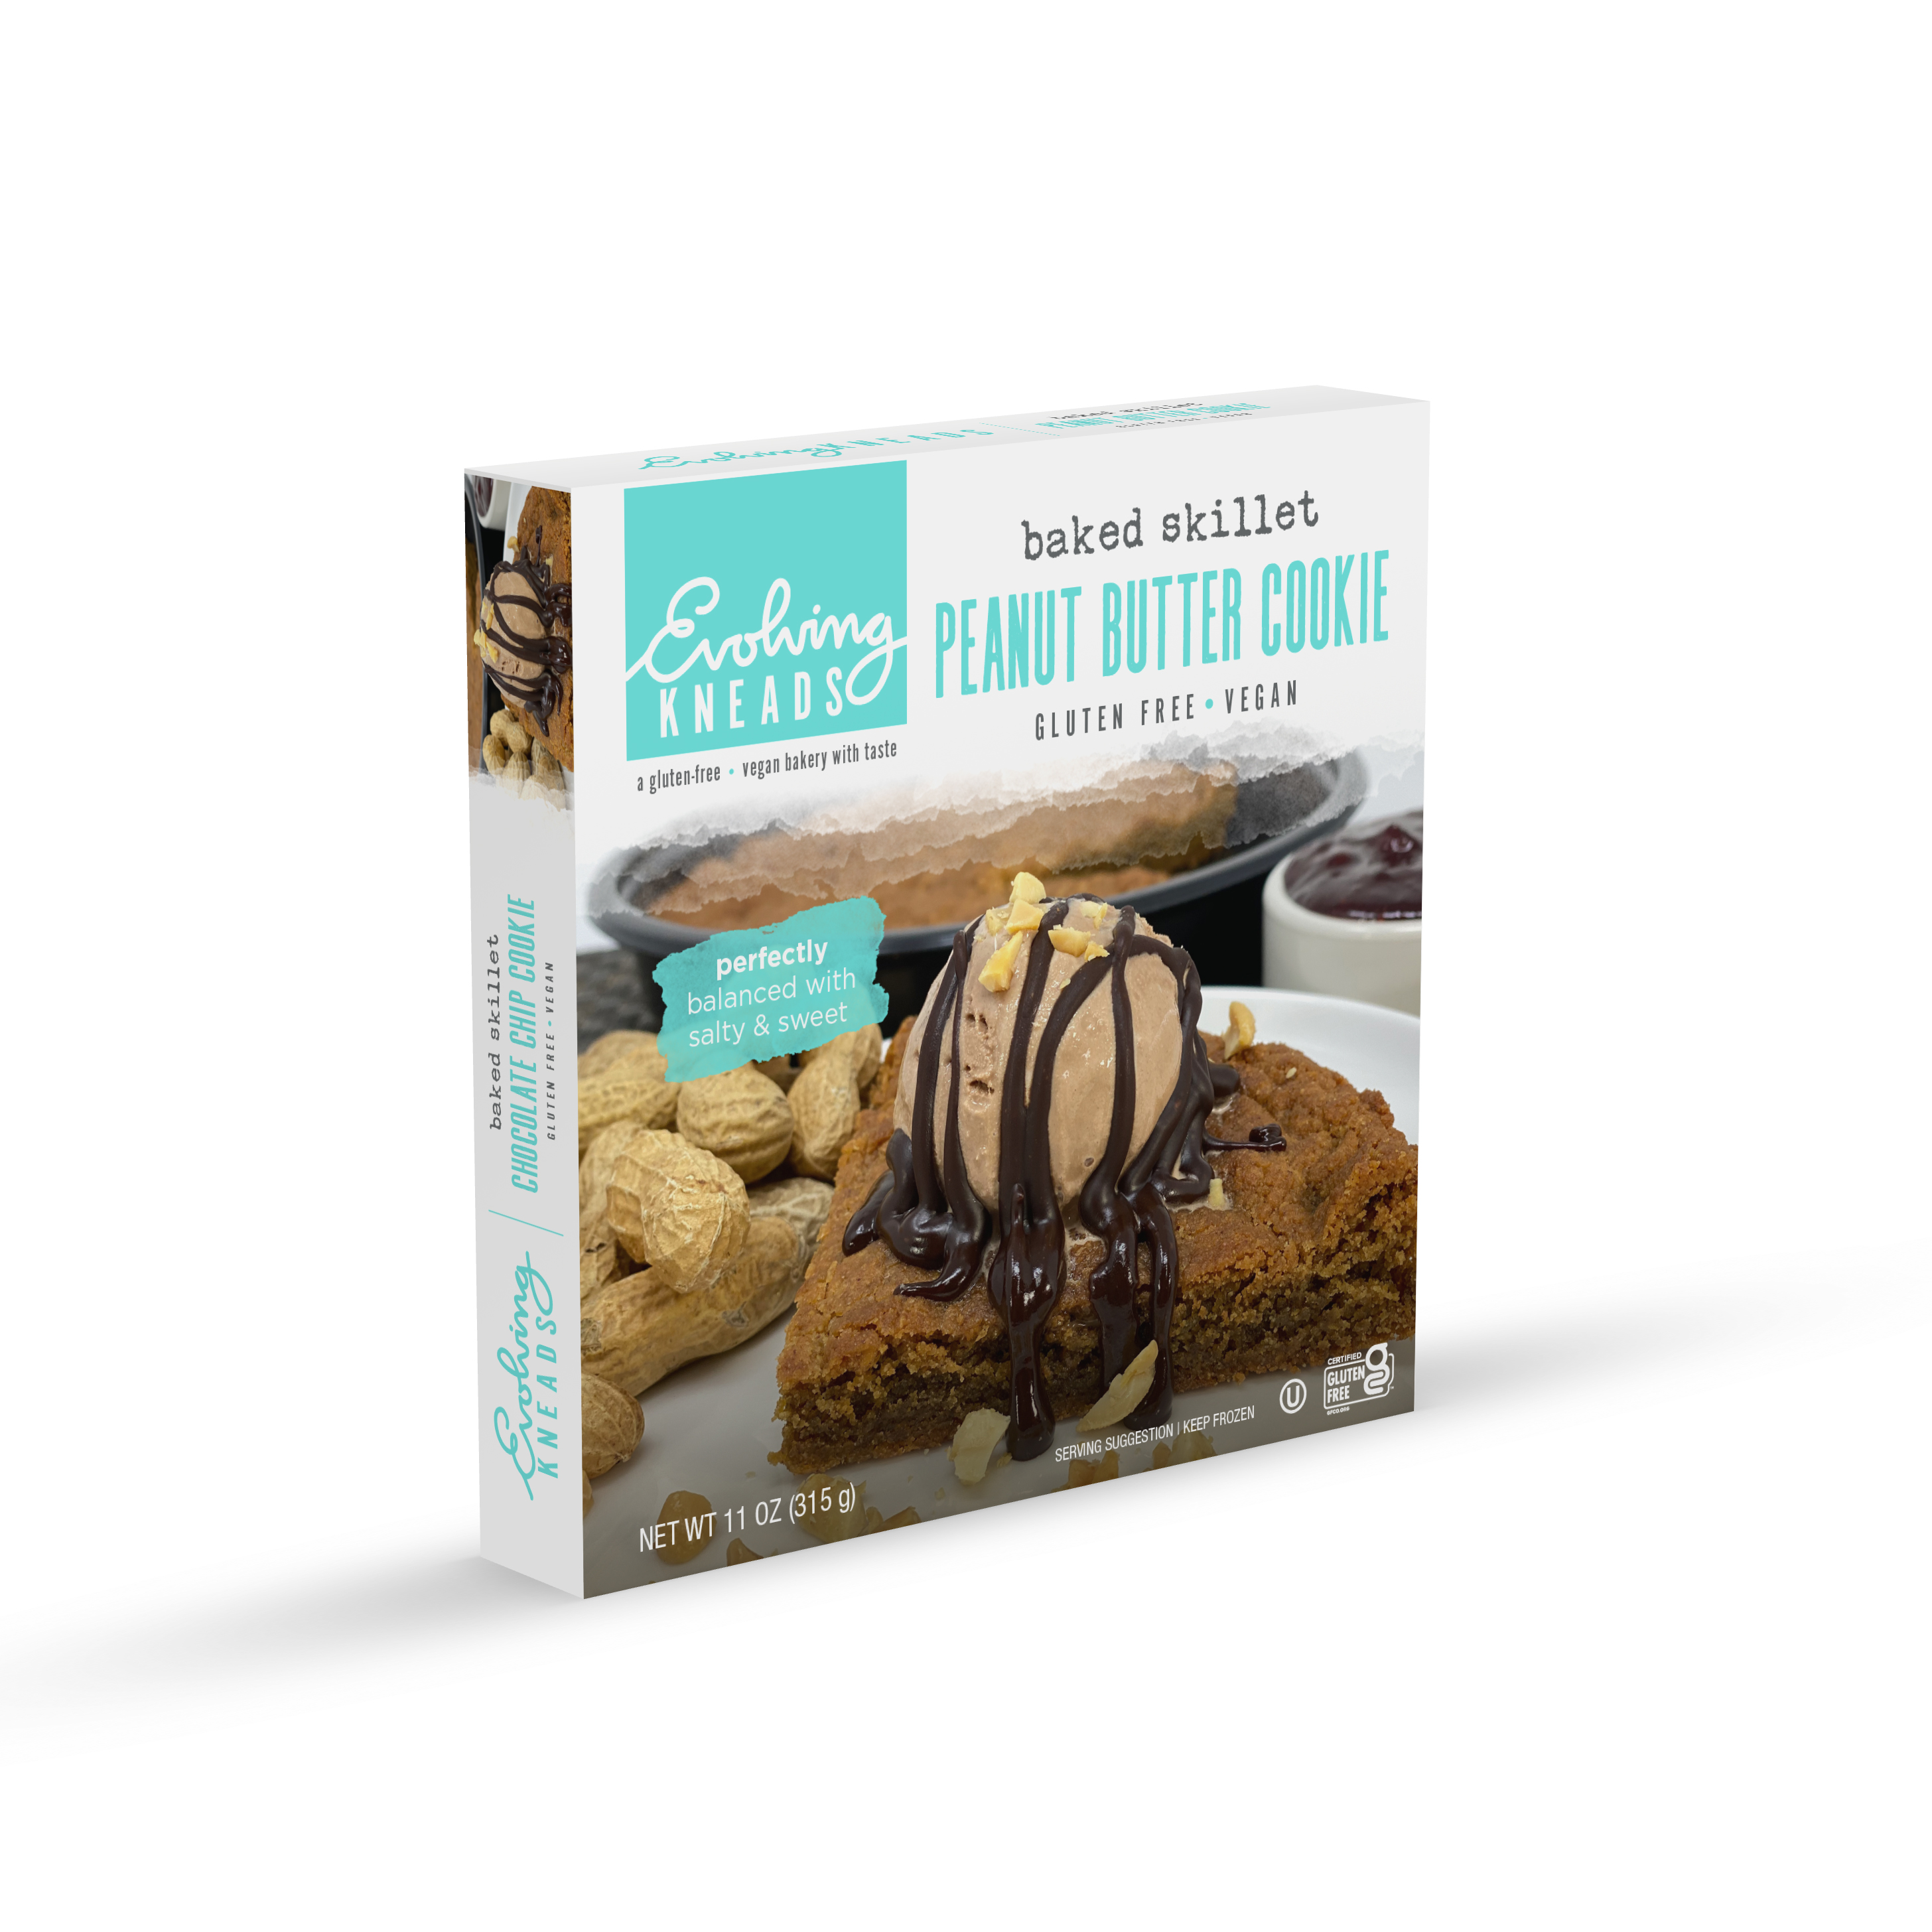 Evolving Kneads GFV Peanut Butter Cookie Skillet 6 units per case 12.1 oz